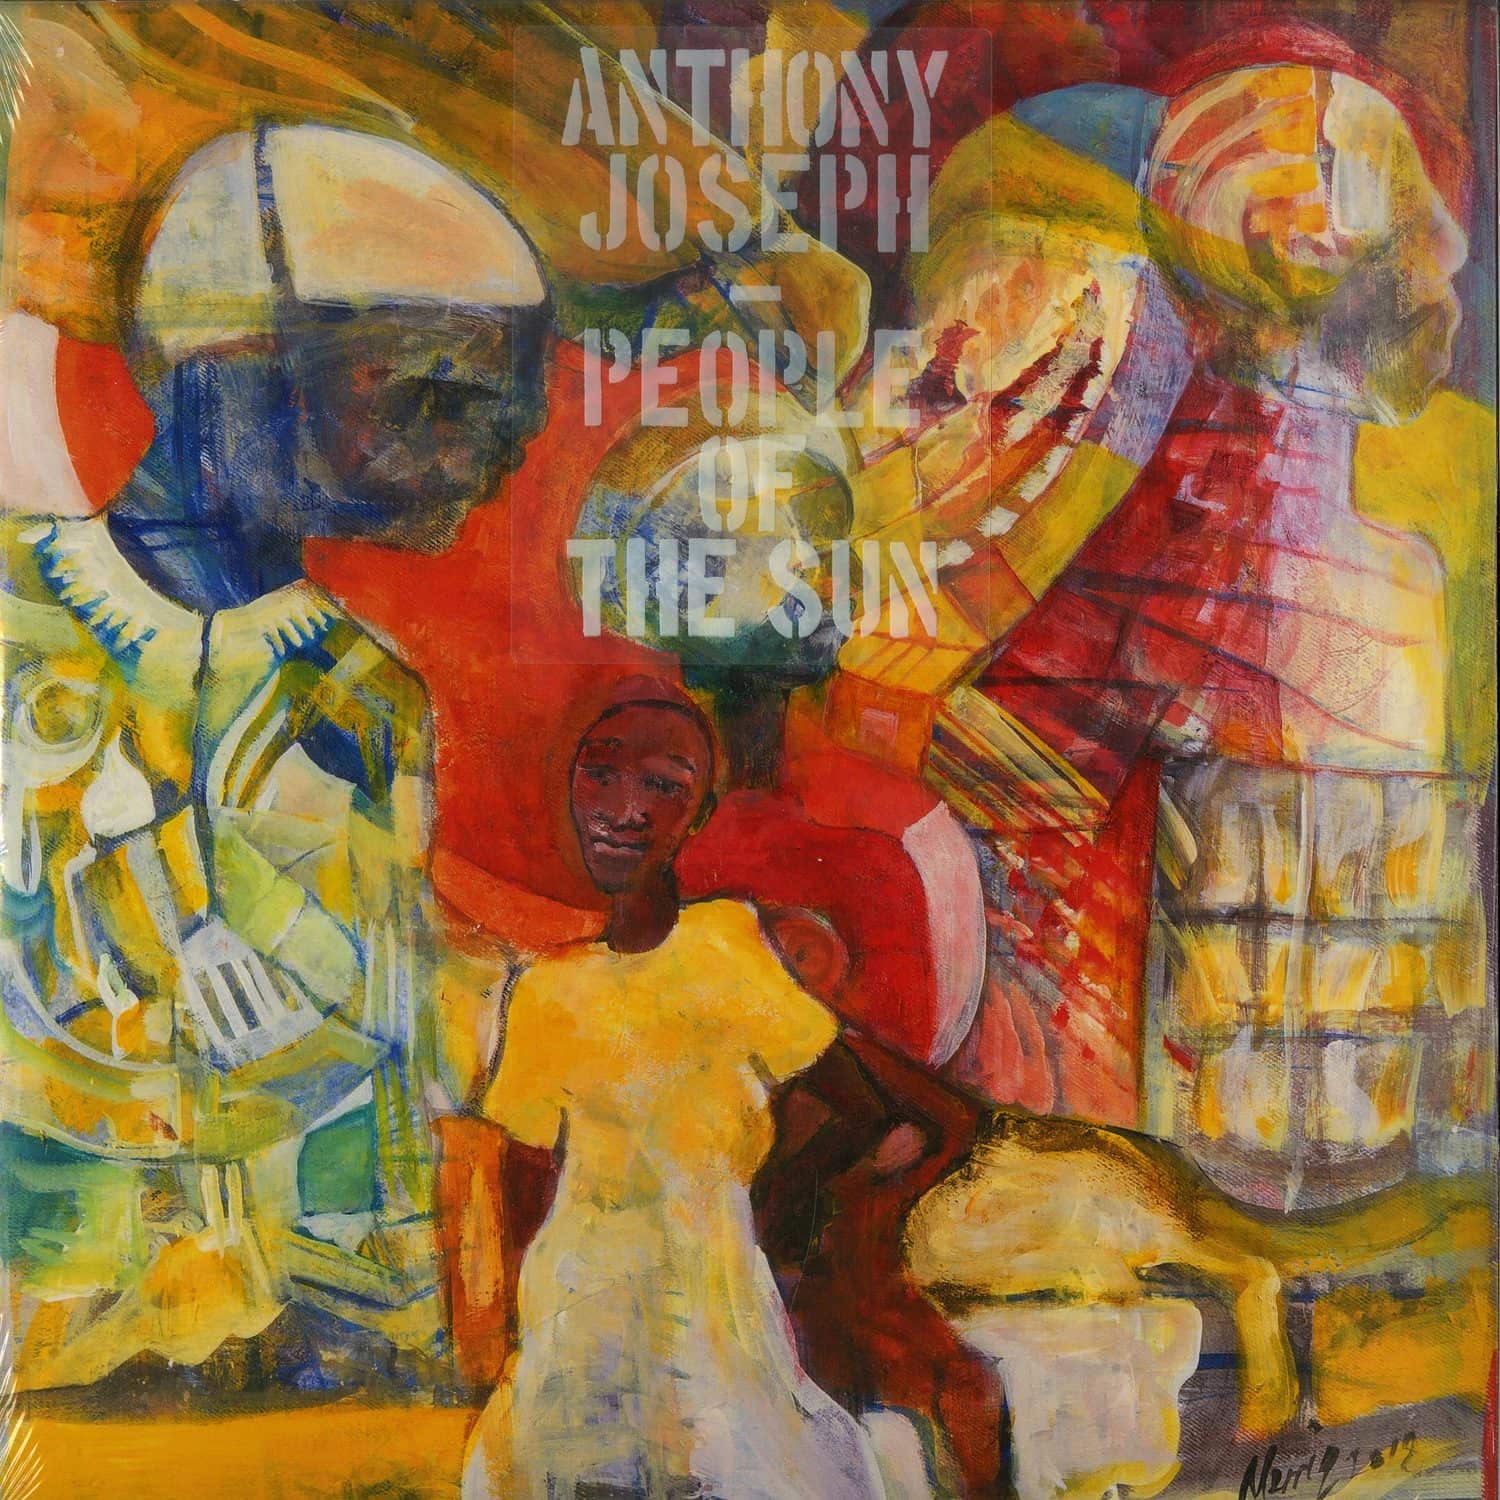 Anthony Joseph - PEOPLE OF THE SUN 